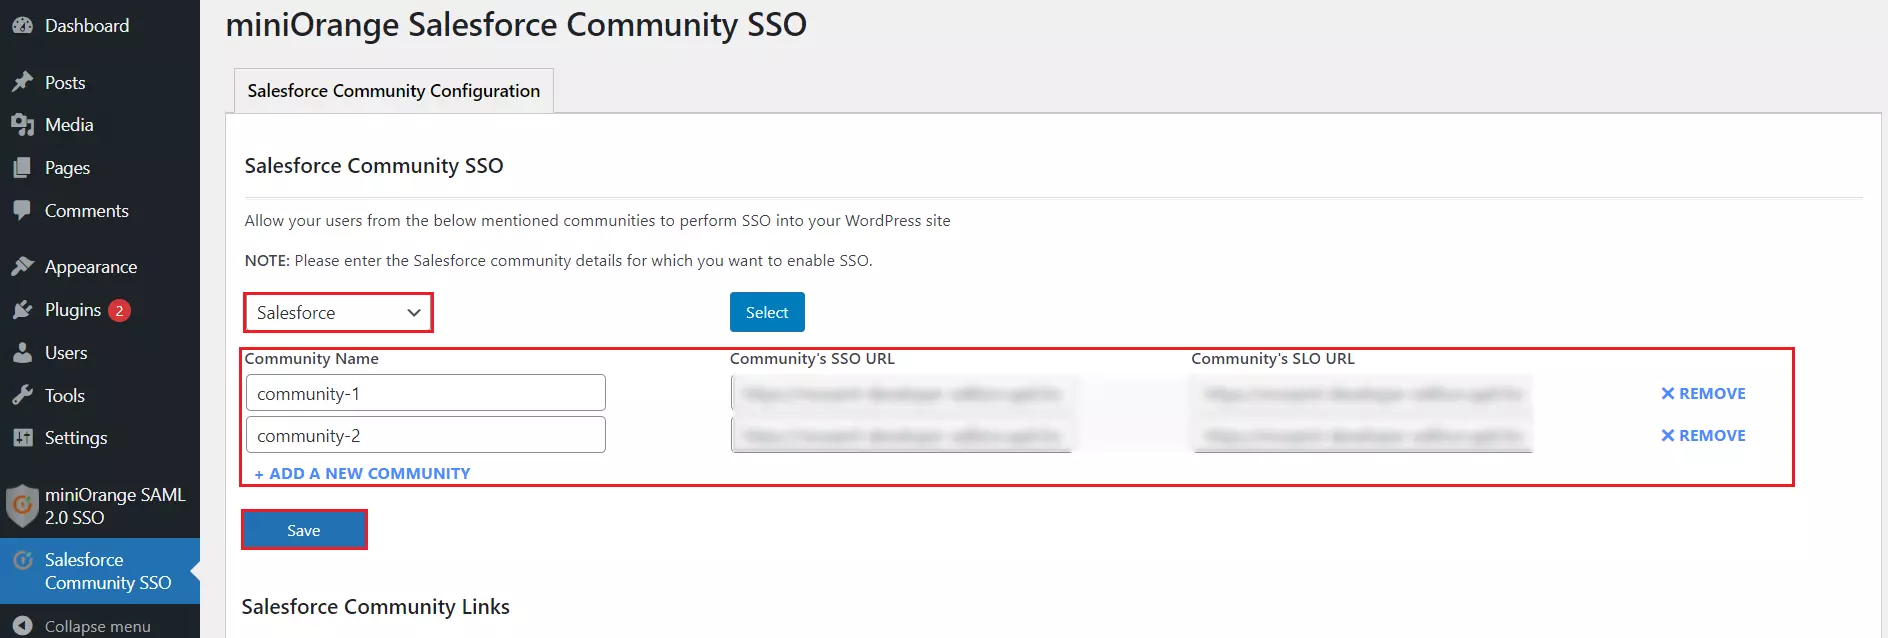 Salesforce Communities WordPress SSO login | Community Name